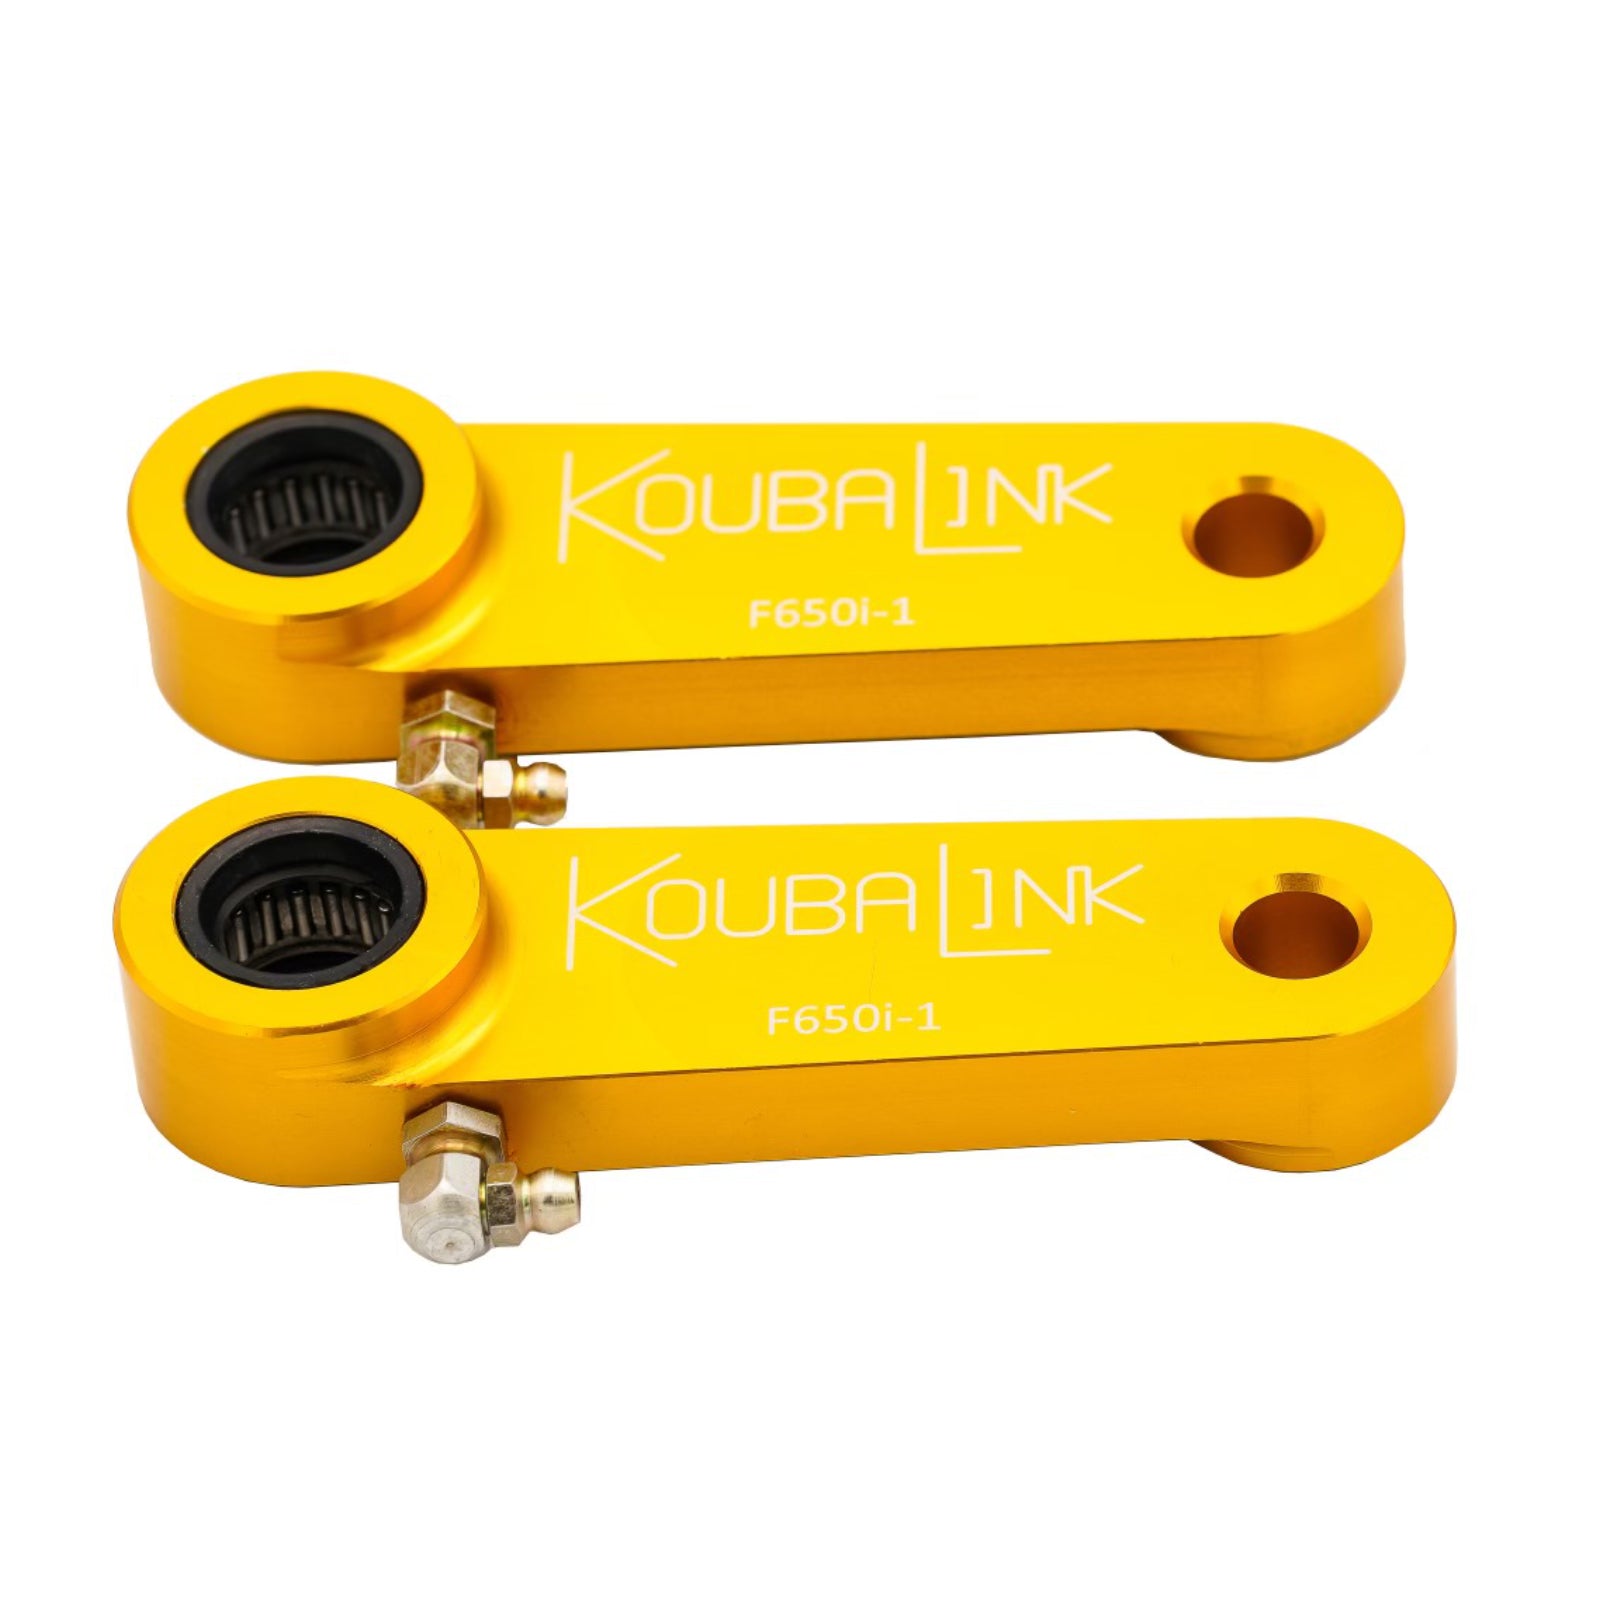 New KOUBALINK 25mm Lowering Linkage F650I-1 - GOLD #KBLF650I1